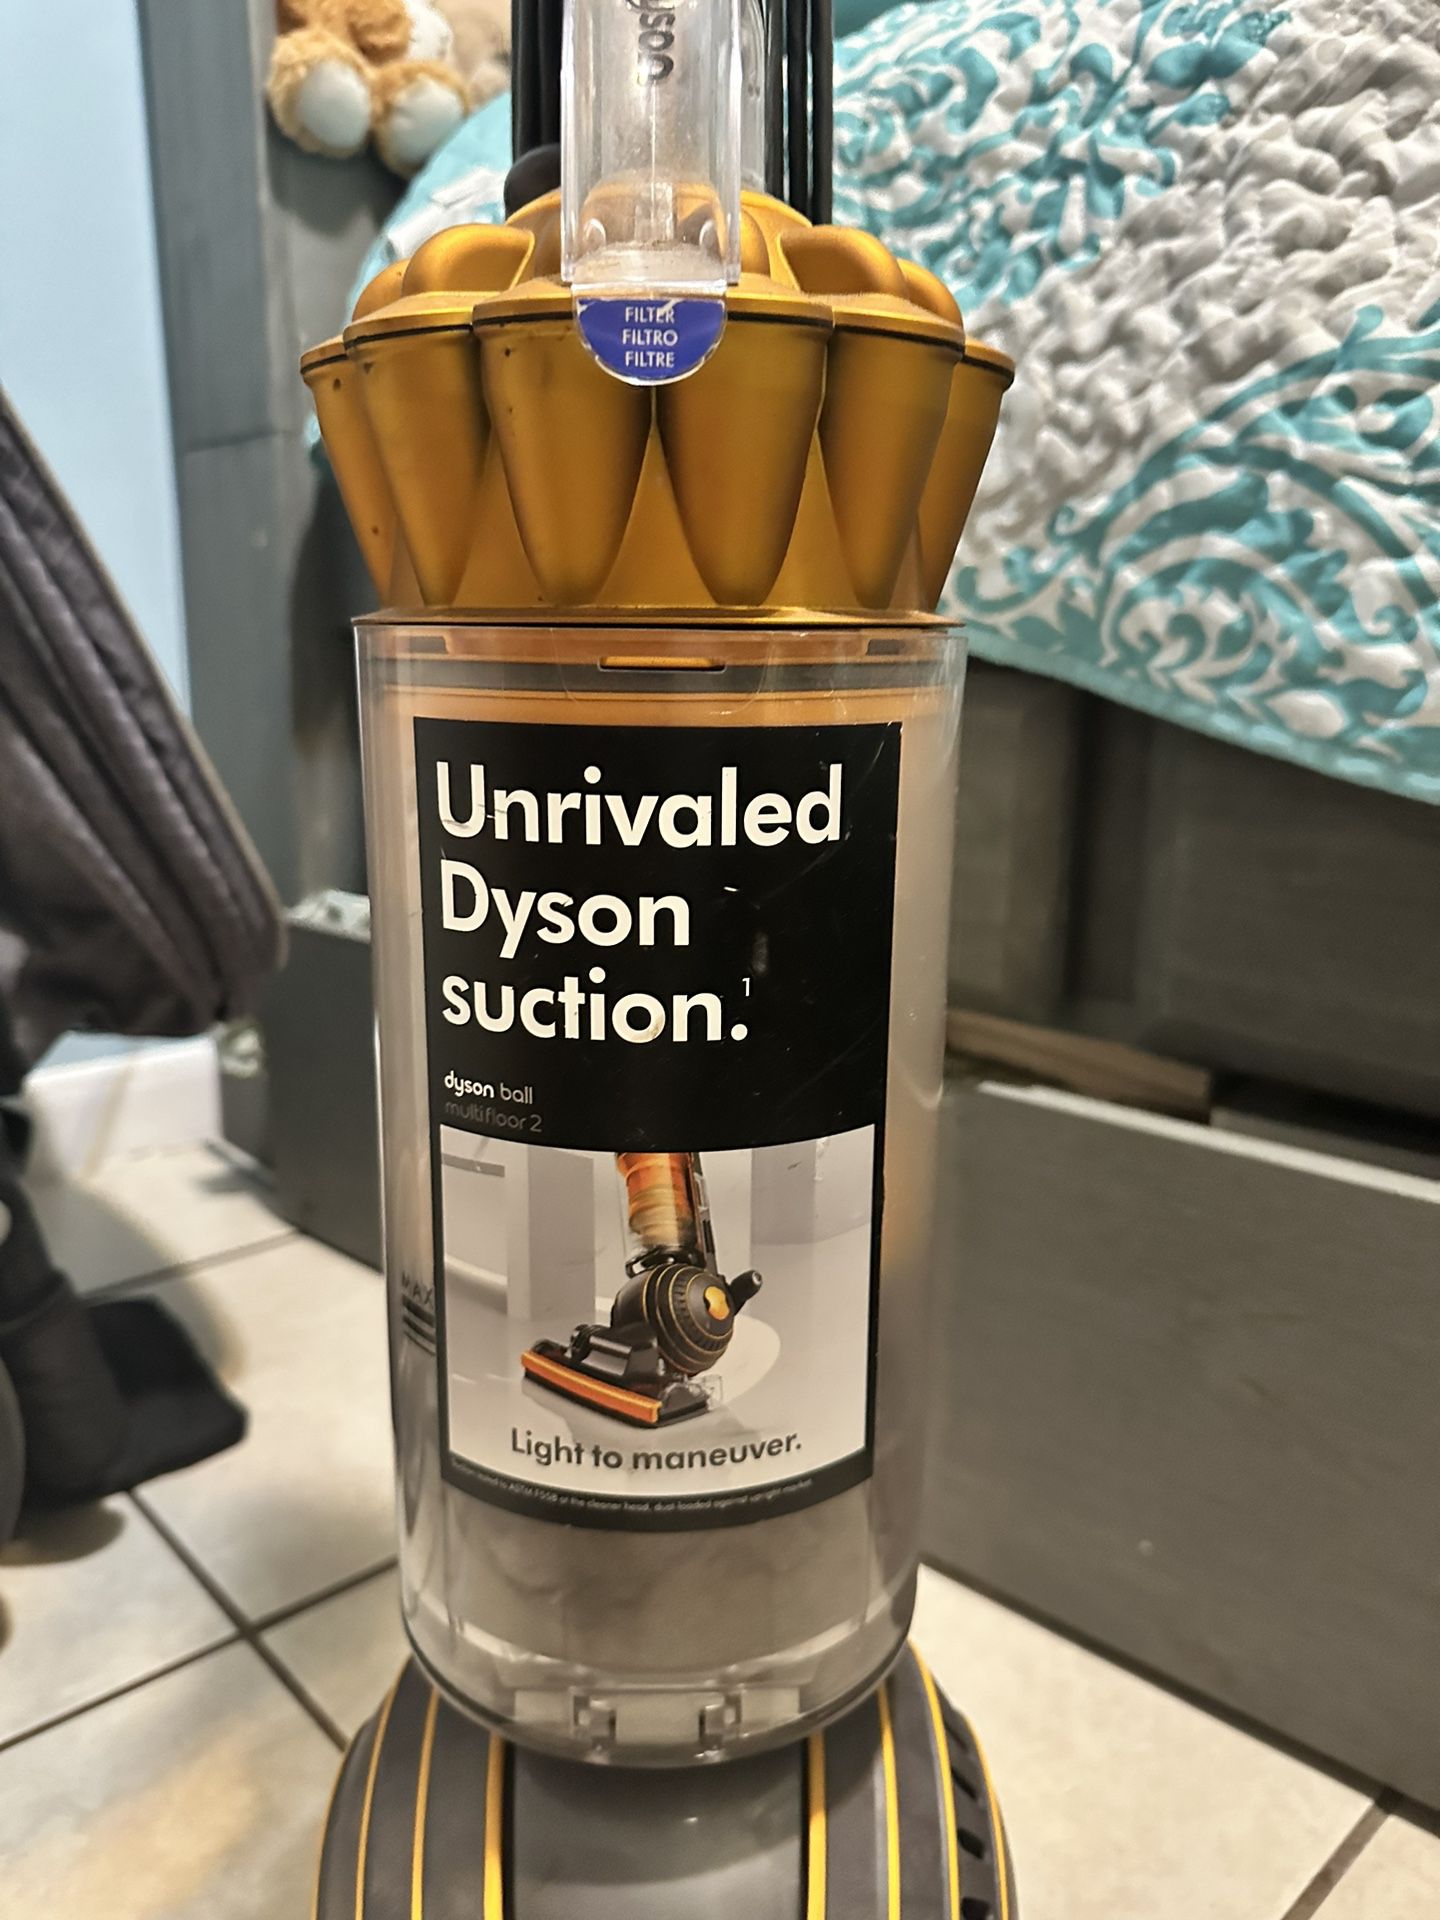 Dyson ball multi floor 2 Cordless vacuum